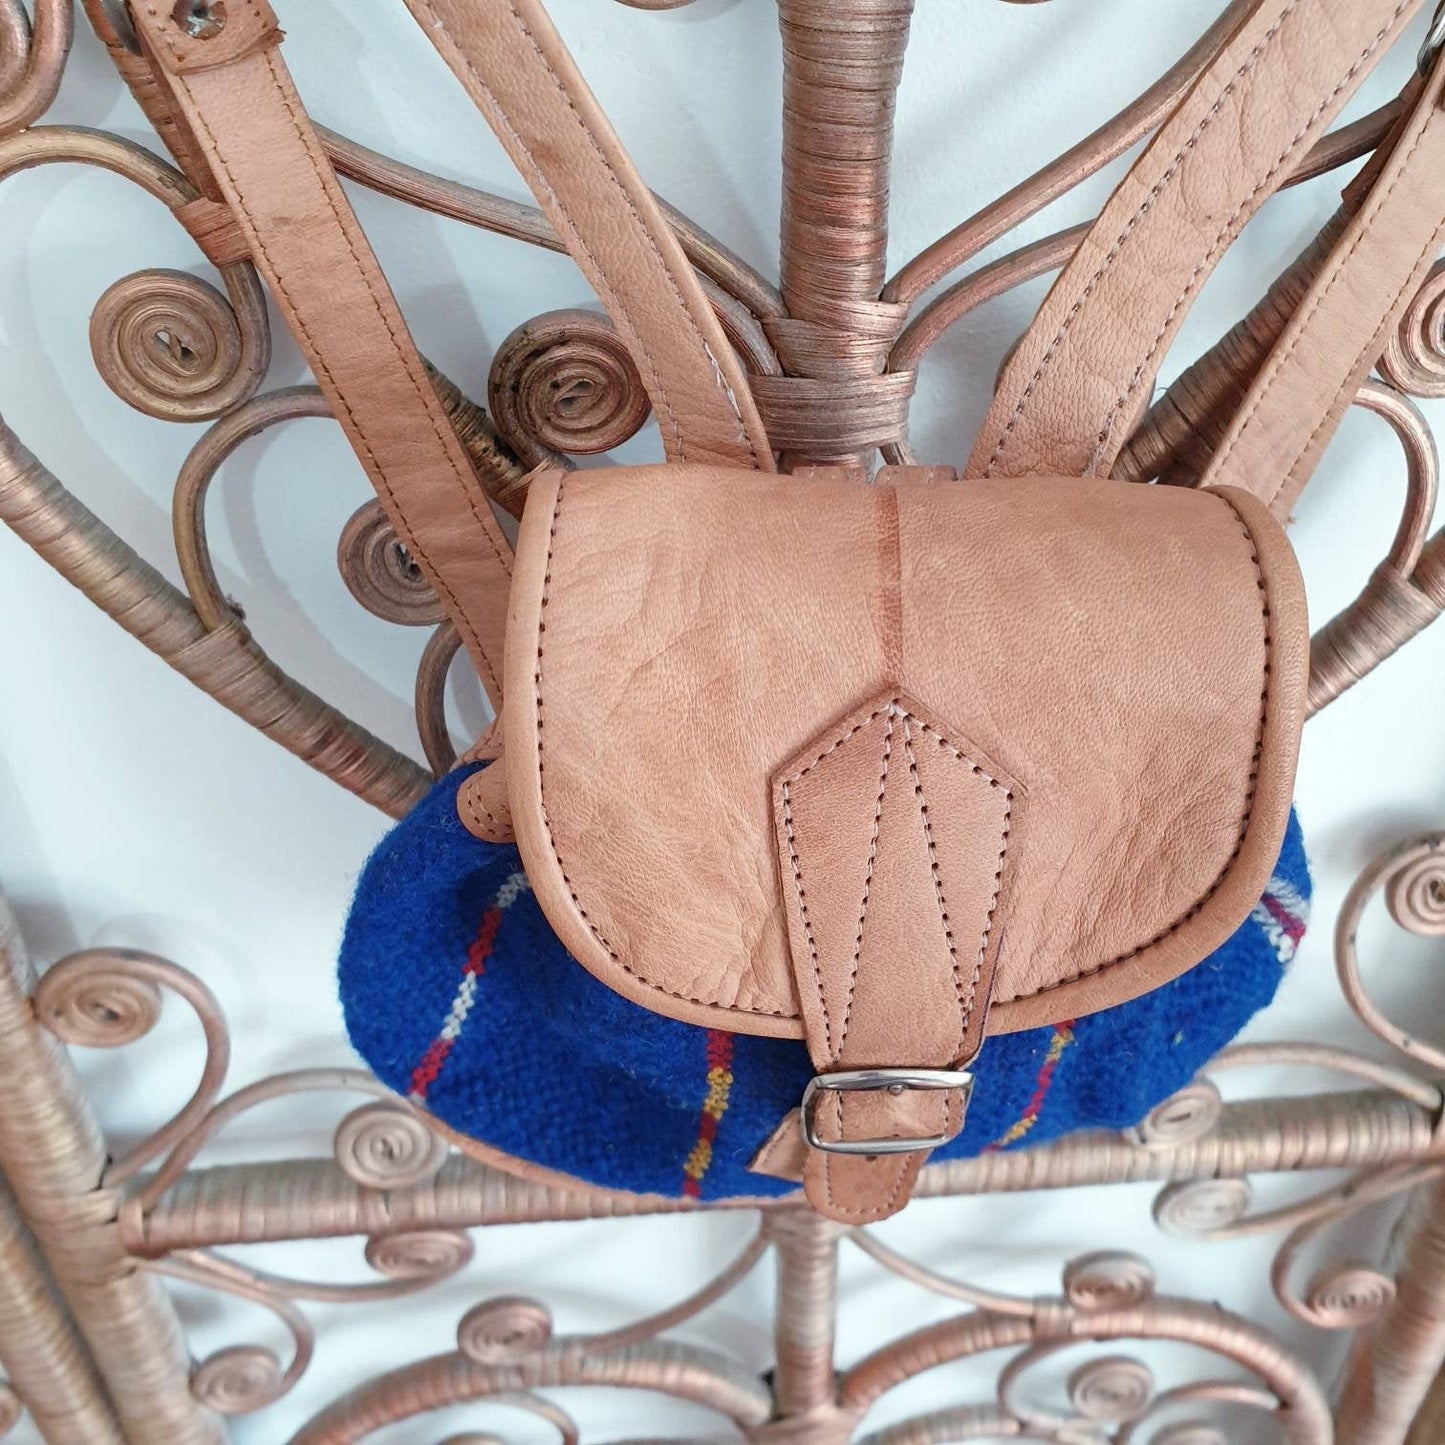 Vintage small wool leather rucksack backpack bag